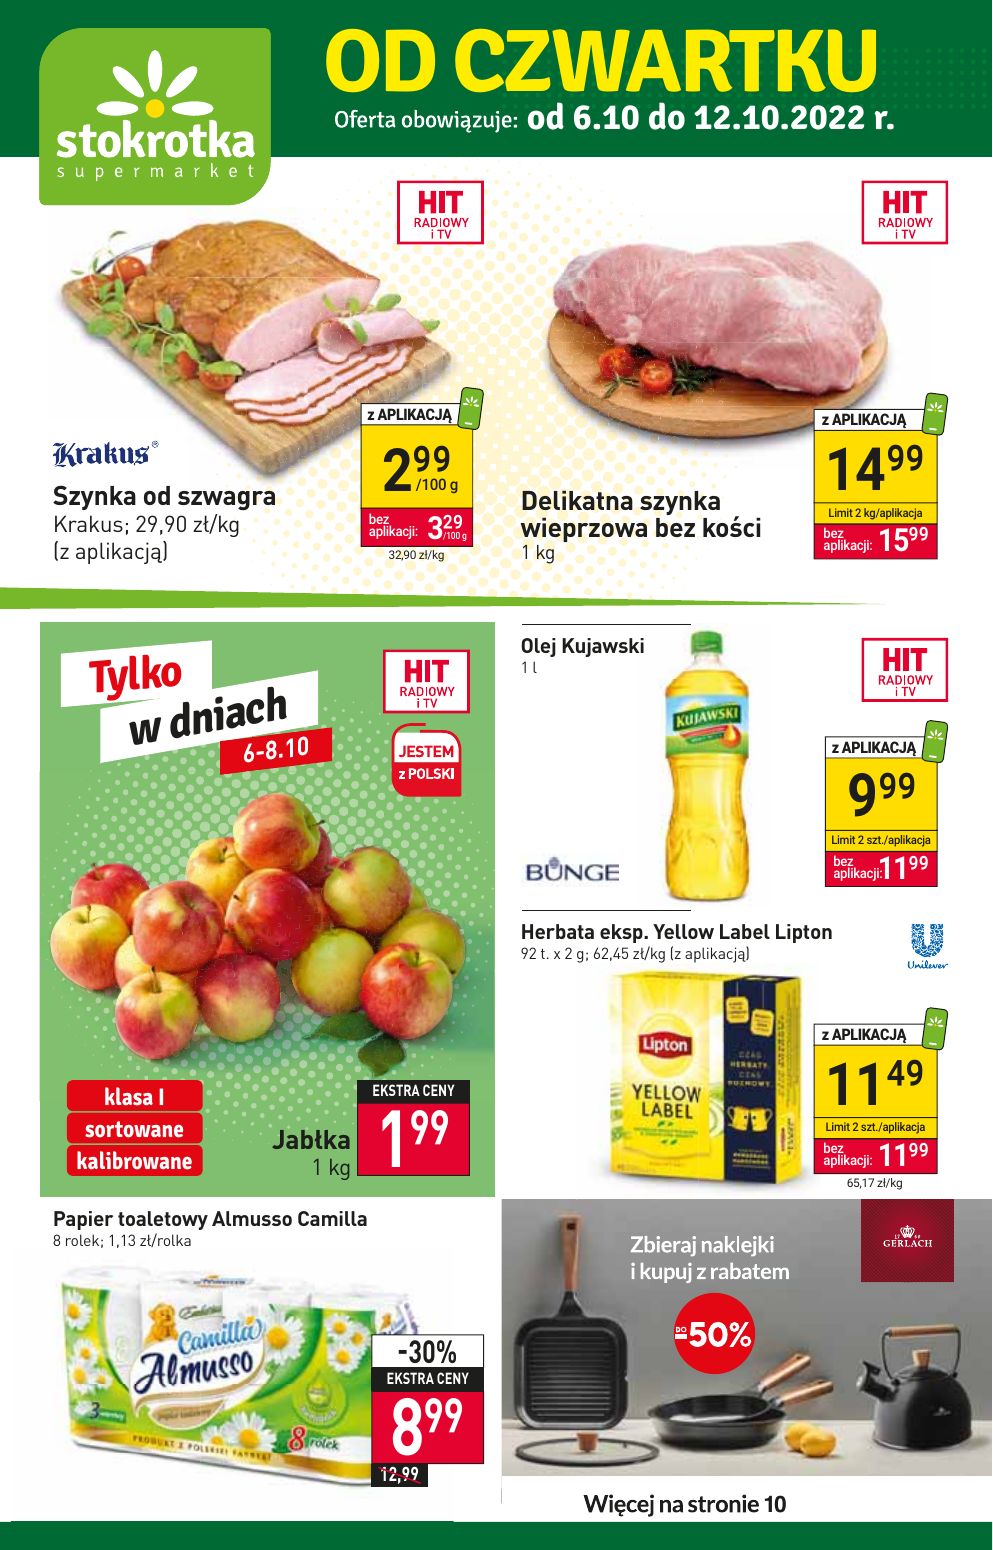 Gazetka STOKROTKA od 06.10 do 12.10.2022 - Supermarket